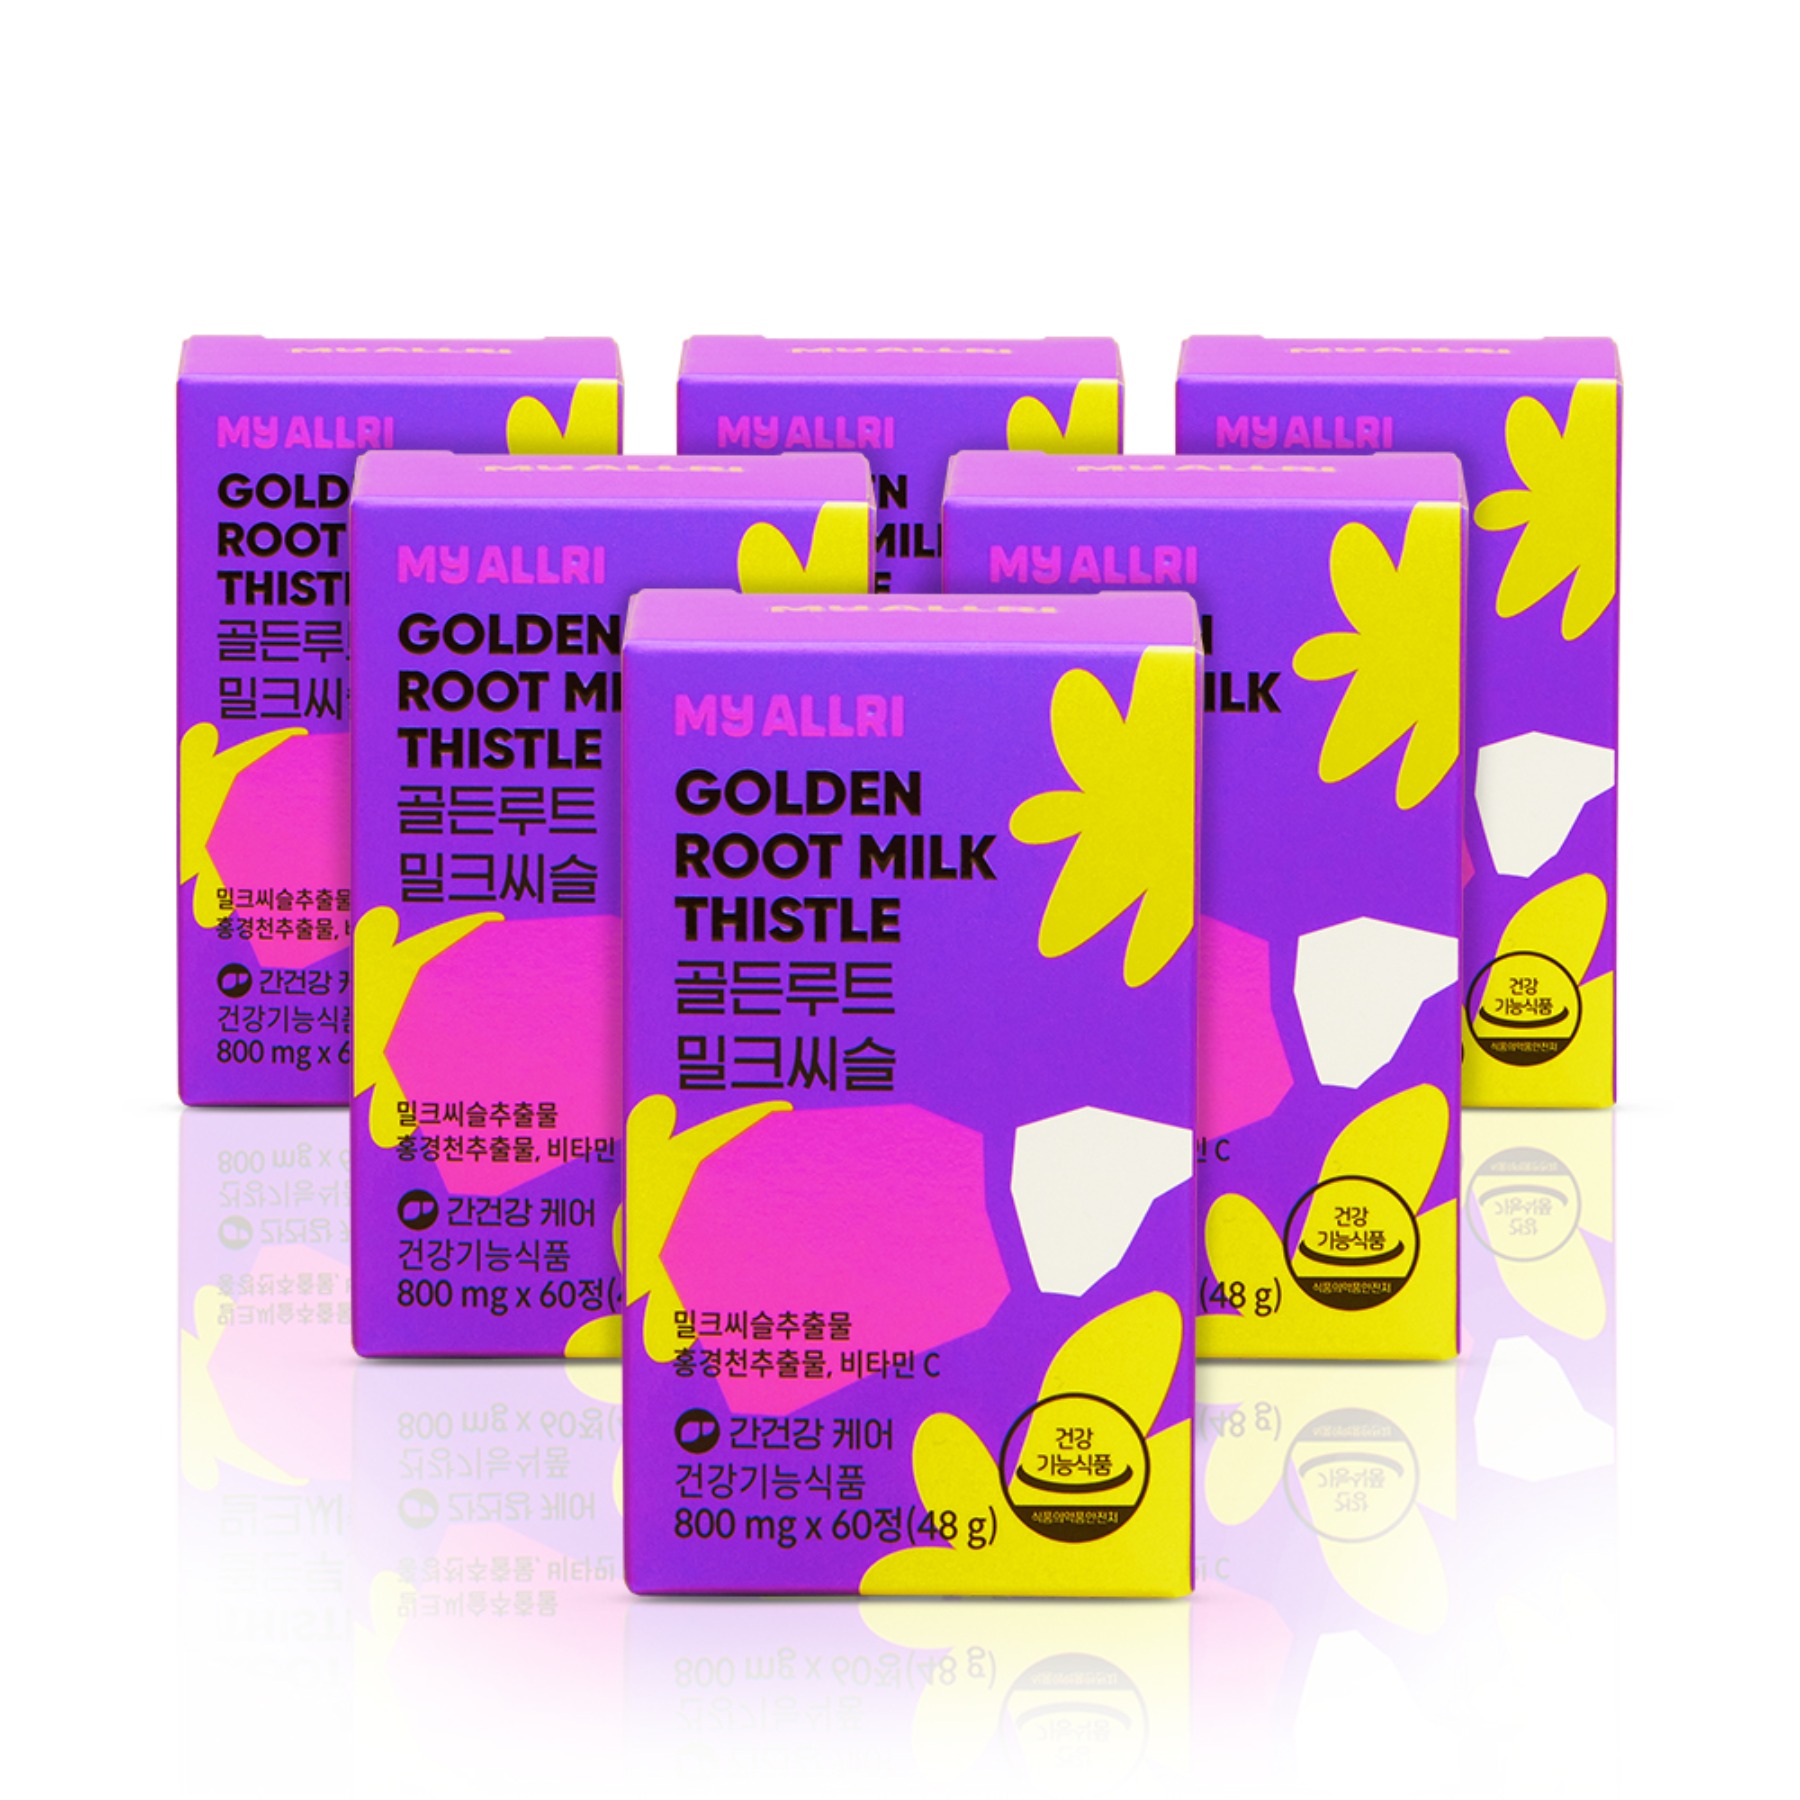 [20%] Golden Root Milk Thistle 6ea (12 months supply)